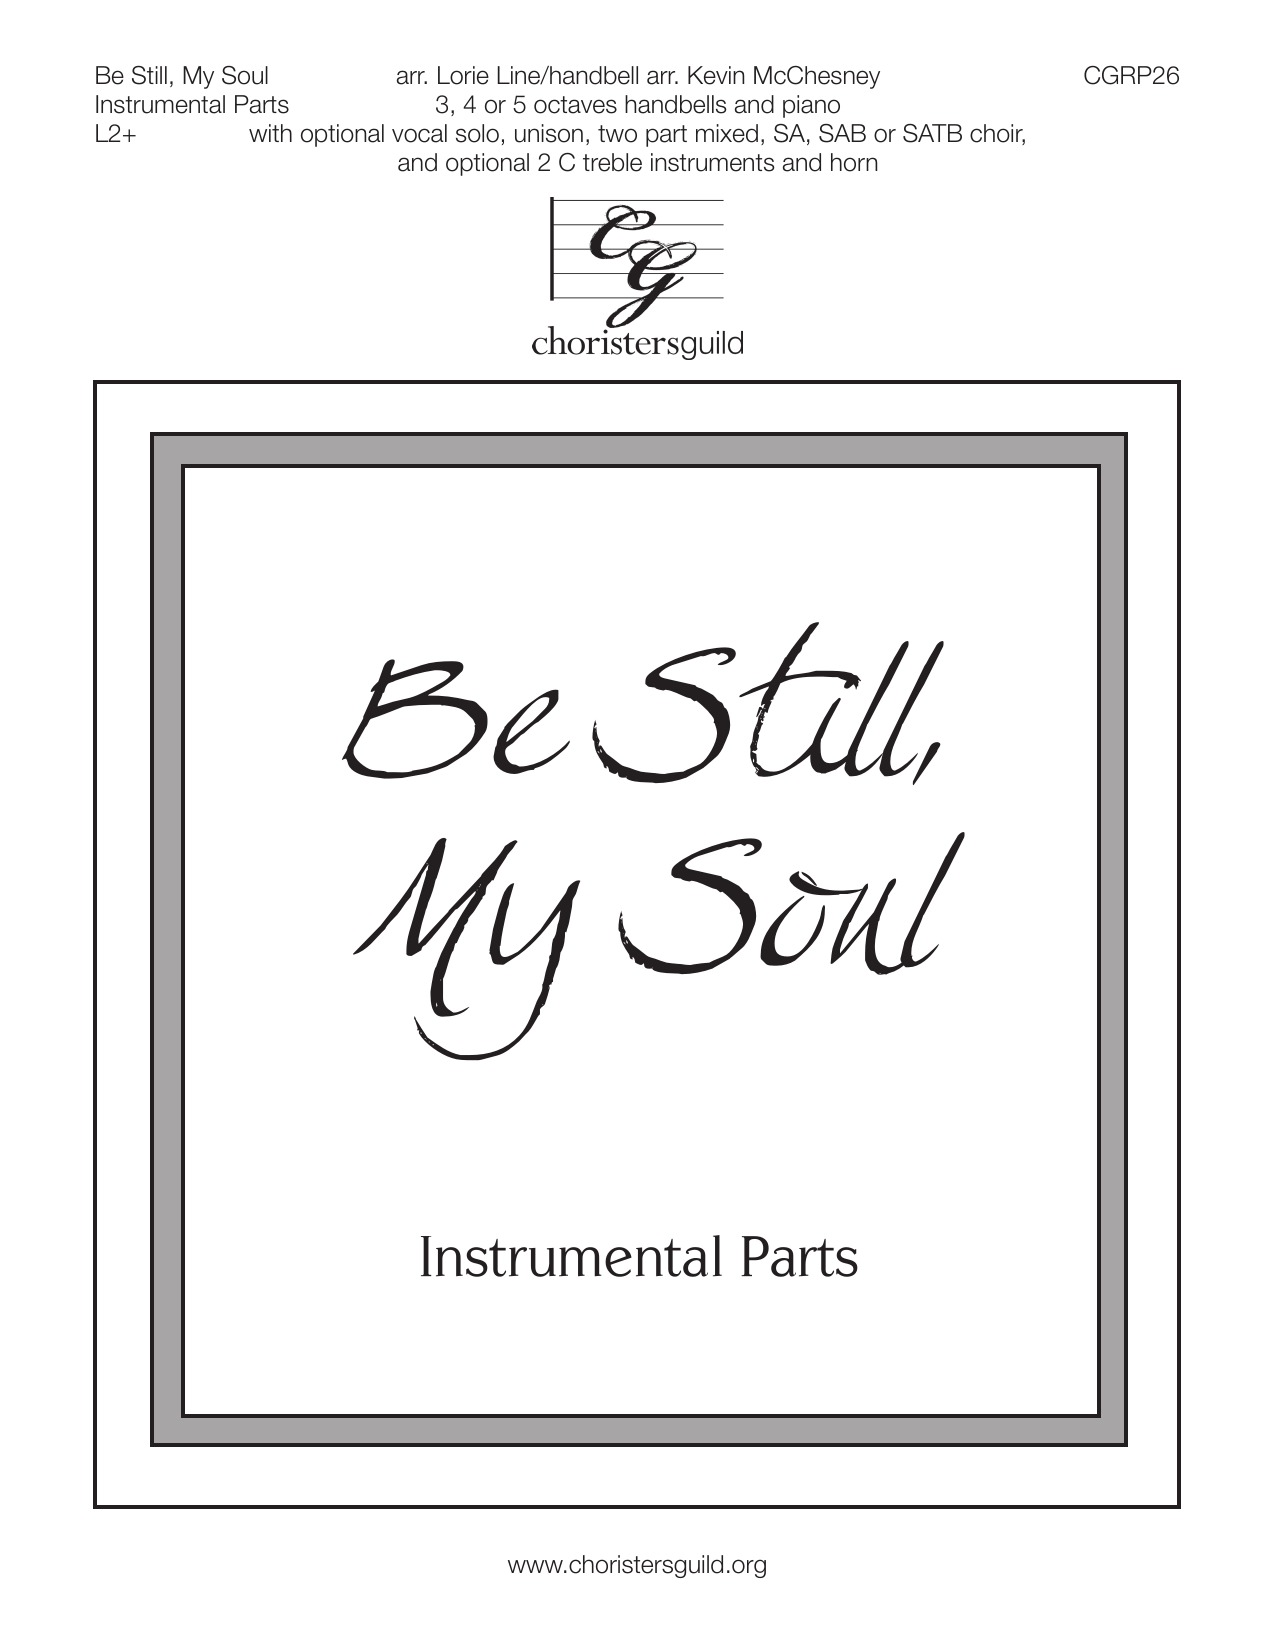 Be Still, My Soul - Instrumental Parts